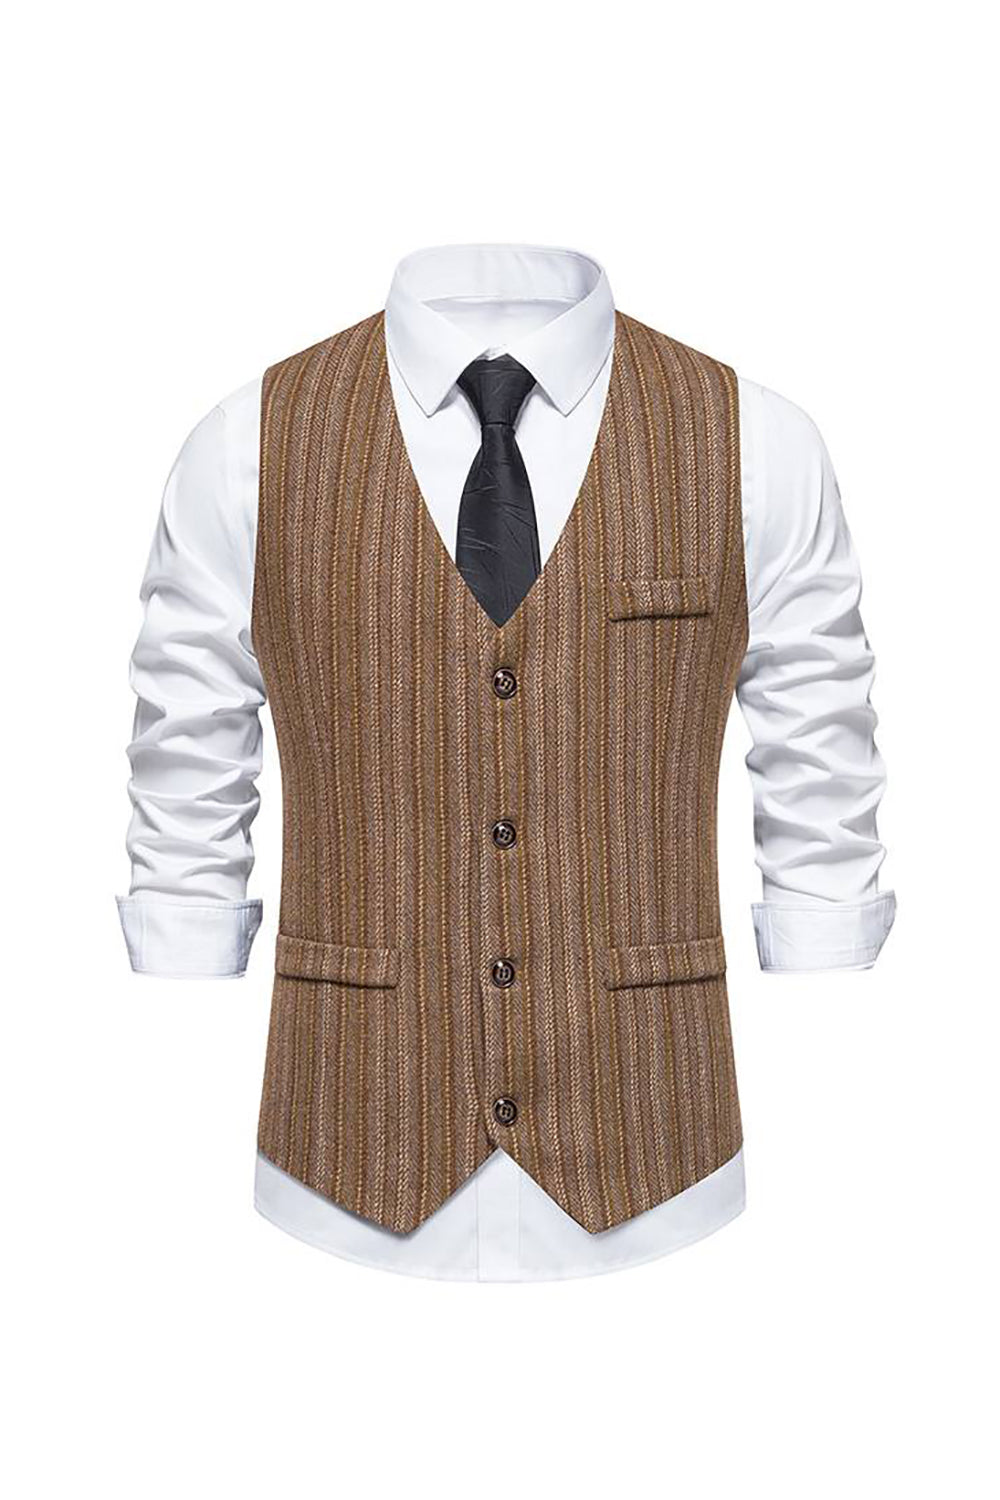 Retro Single Breasted V Neck Grey Men's Suit Vest